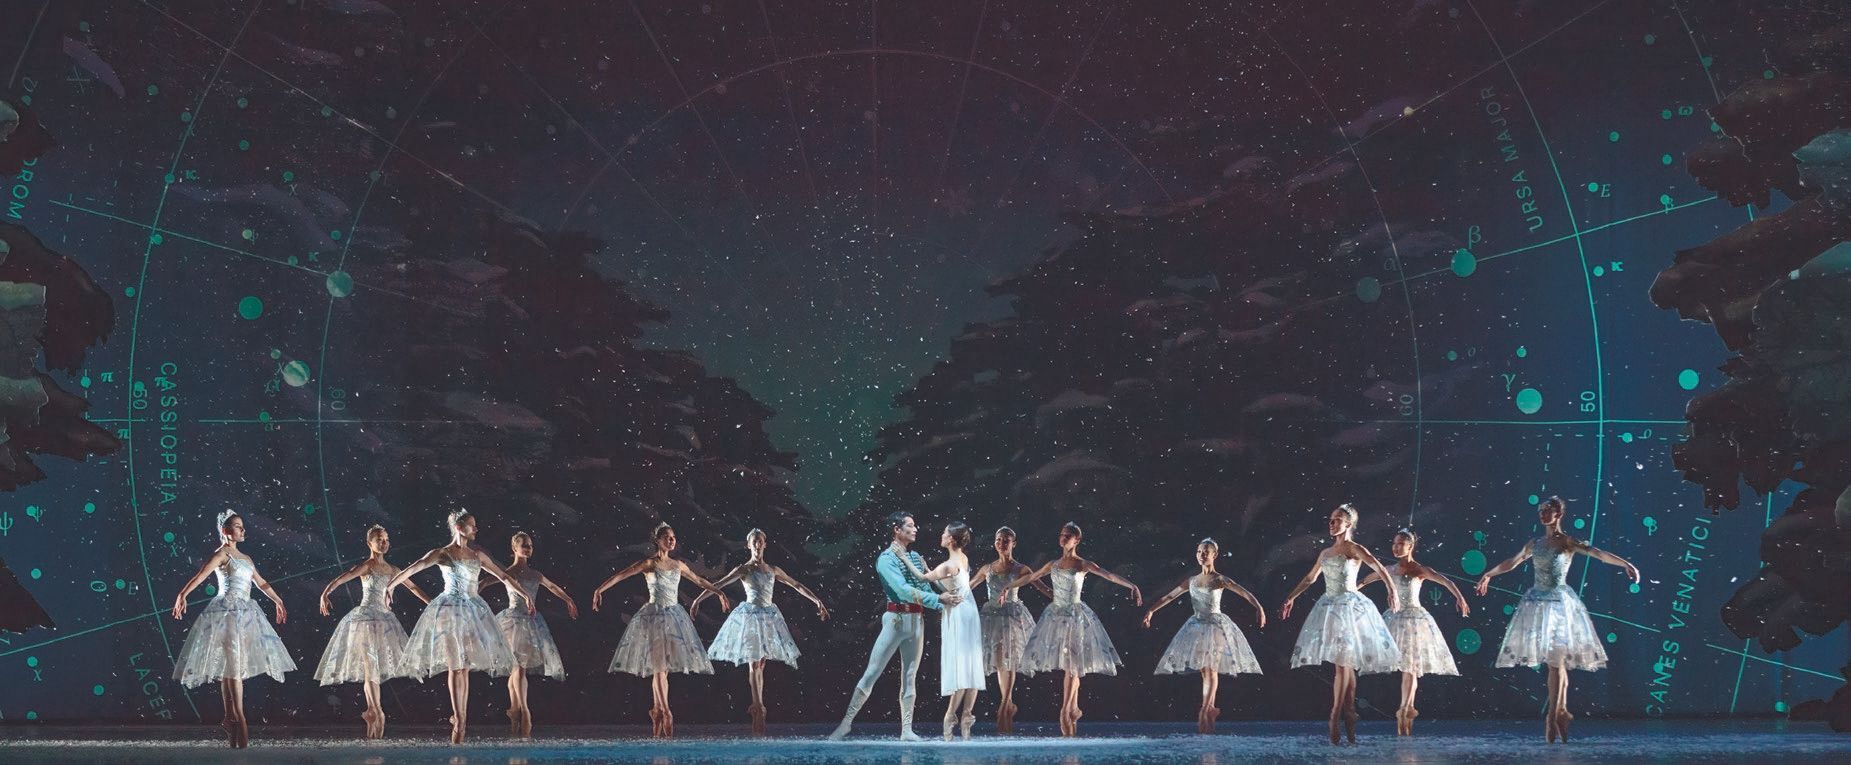 Atlanta Ballet’s The Nutcracker is choreographed by Yuri Possokhov with music by Pyotr Ilyich Tchaikovsky. PHOTO BY KIM KENNEY